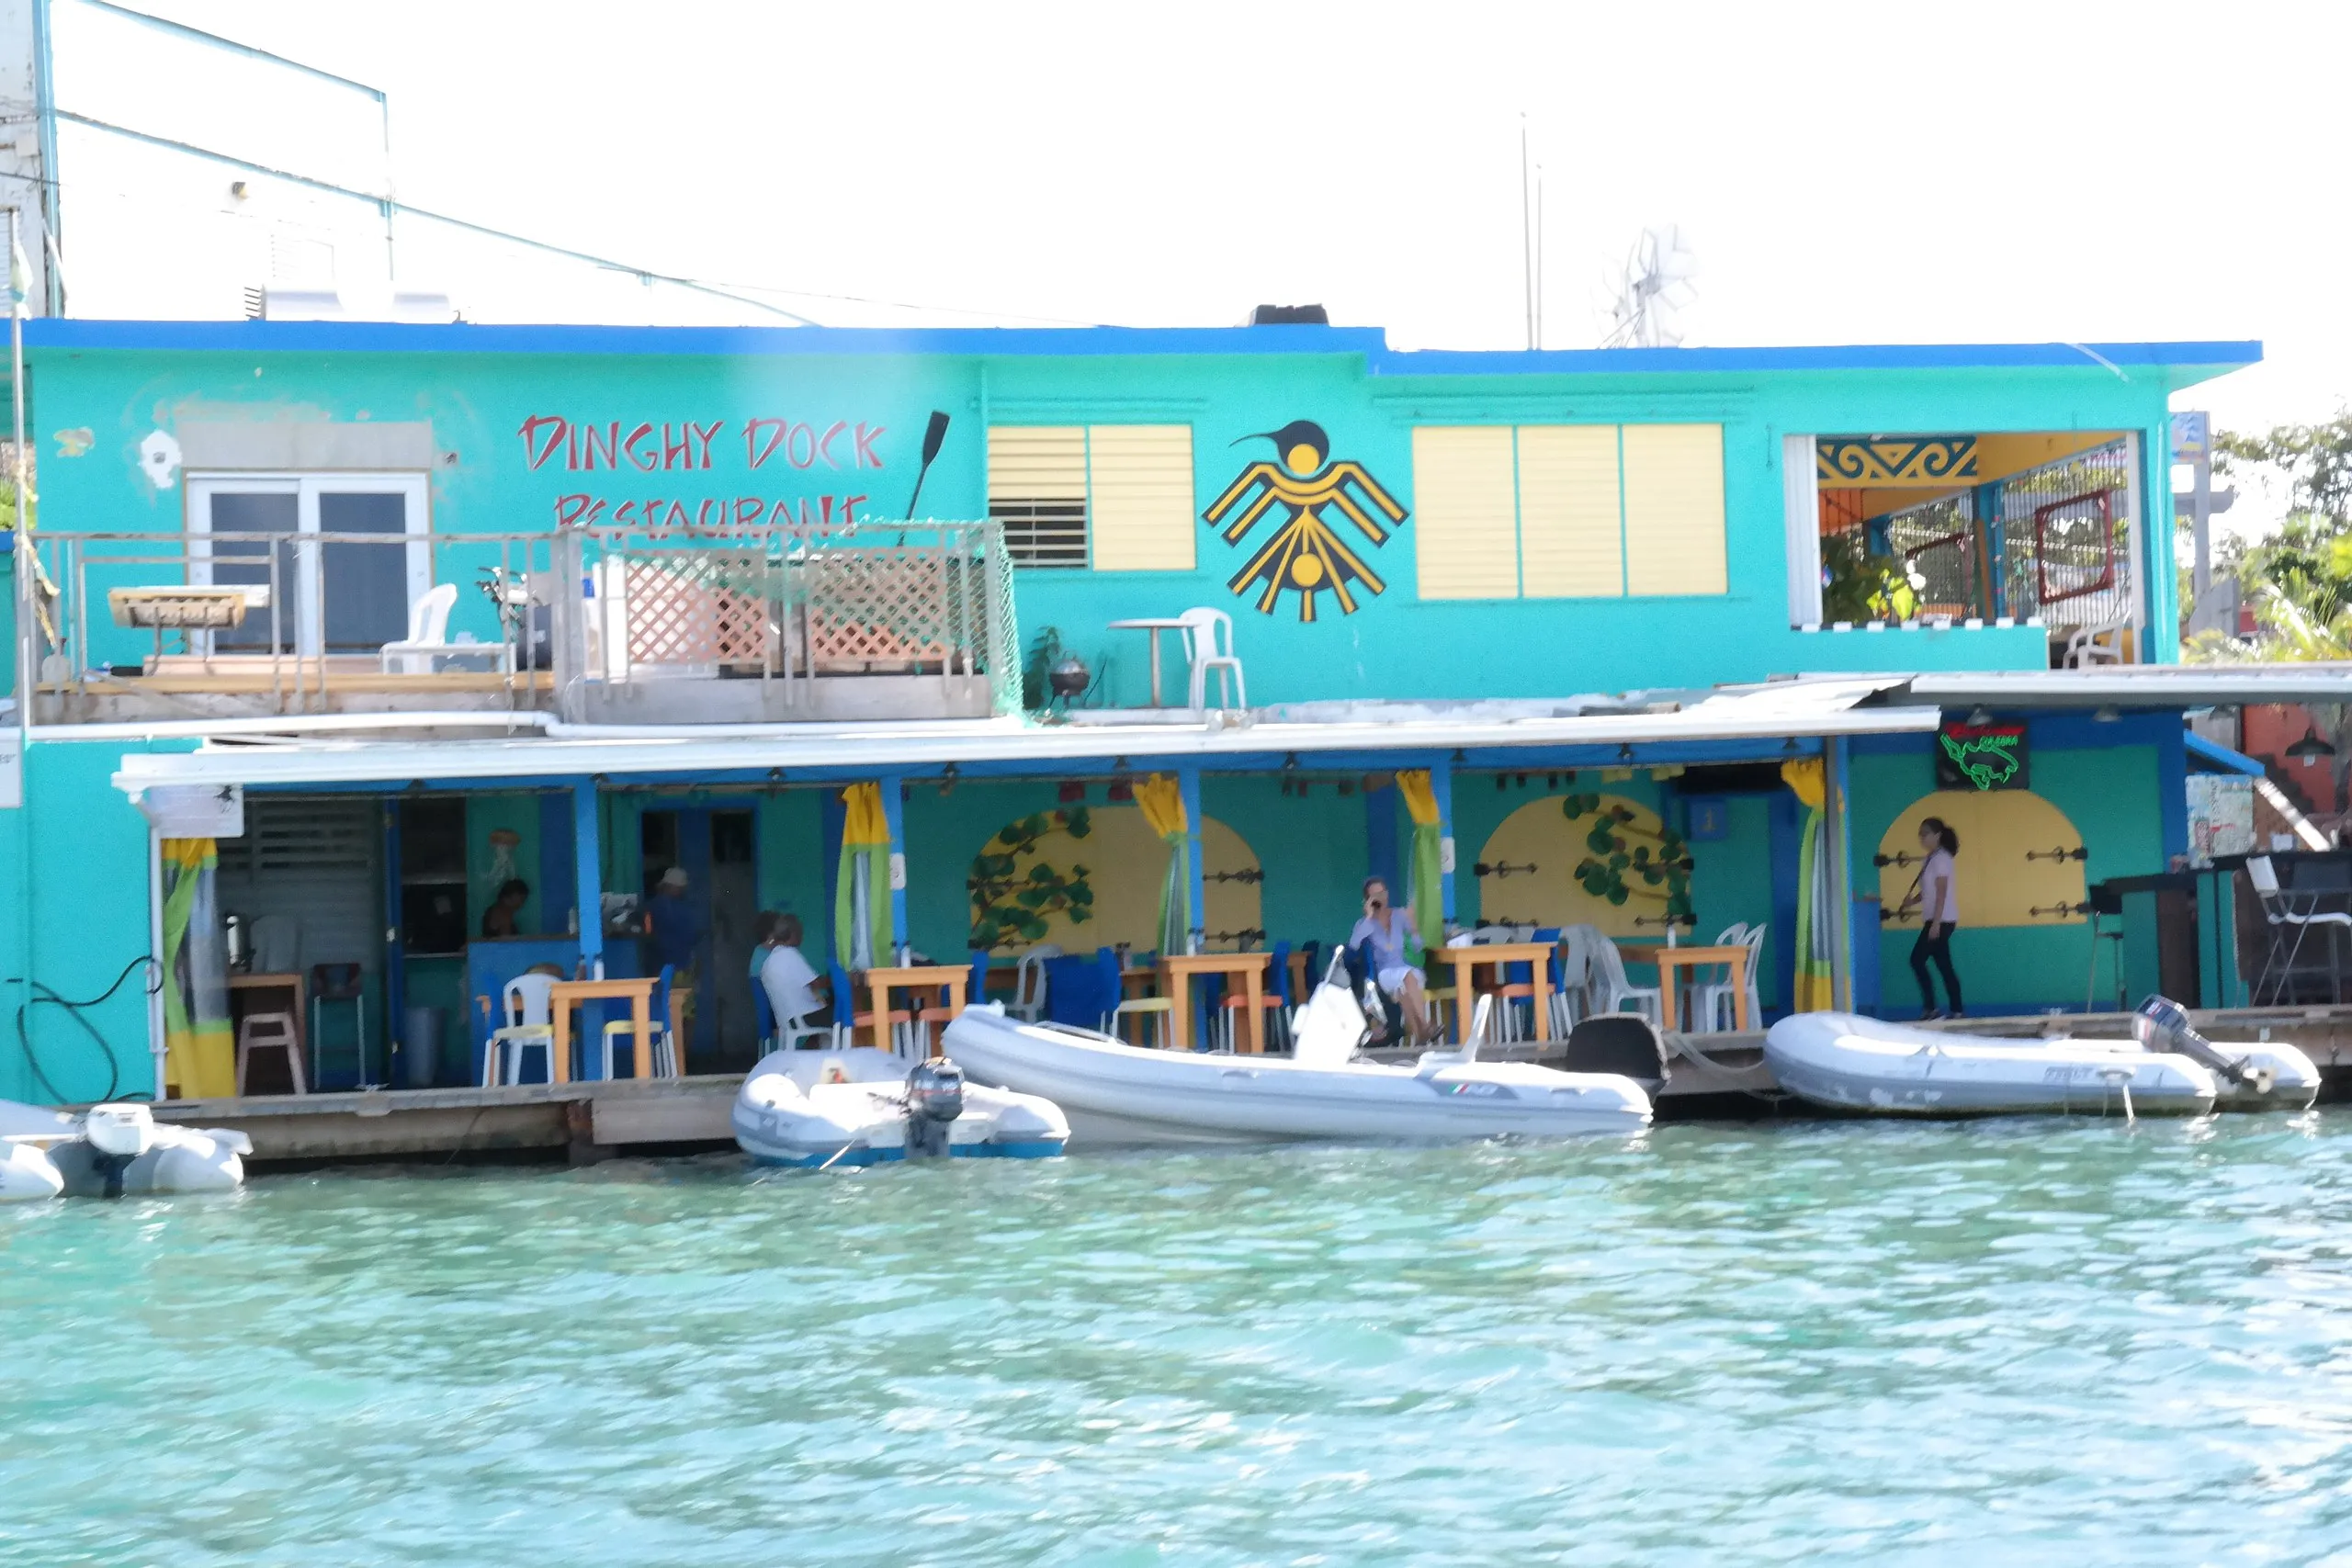 Dinghy Dock Restaurant in Puerto Rico, Caribbean | Restaurants - Rated 3.8